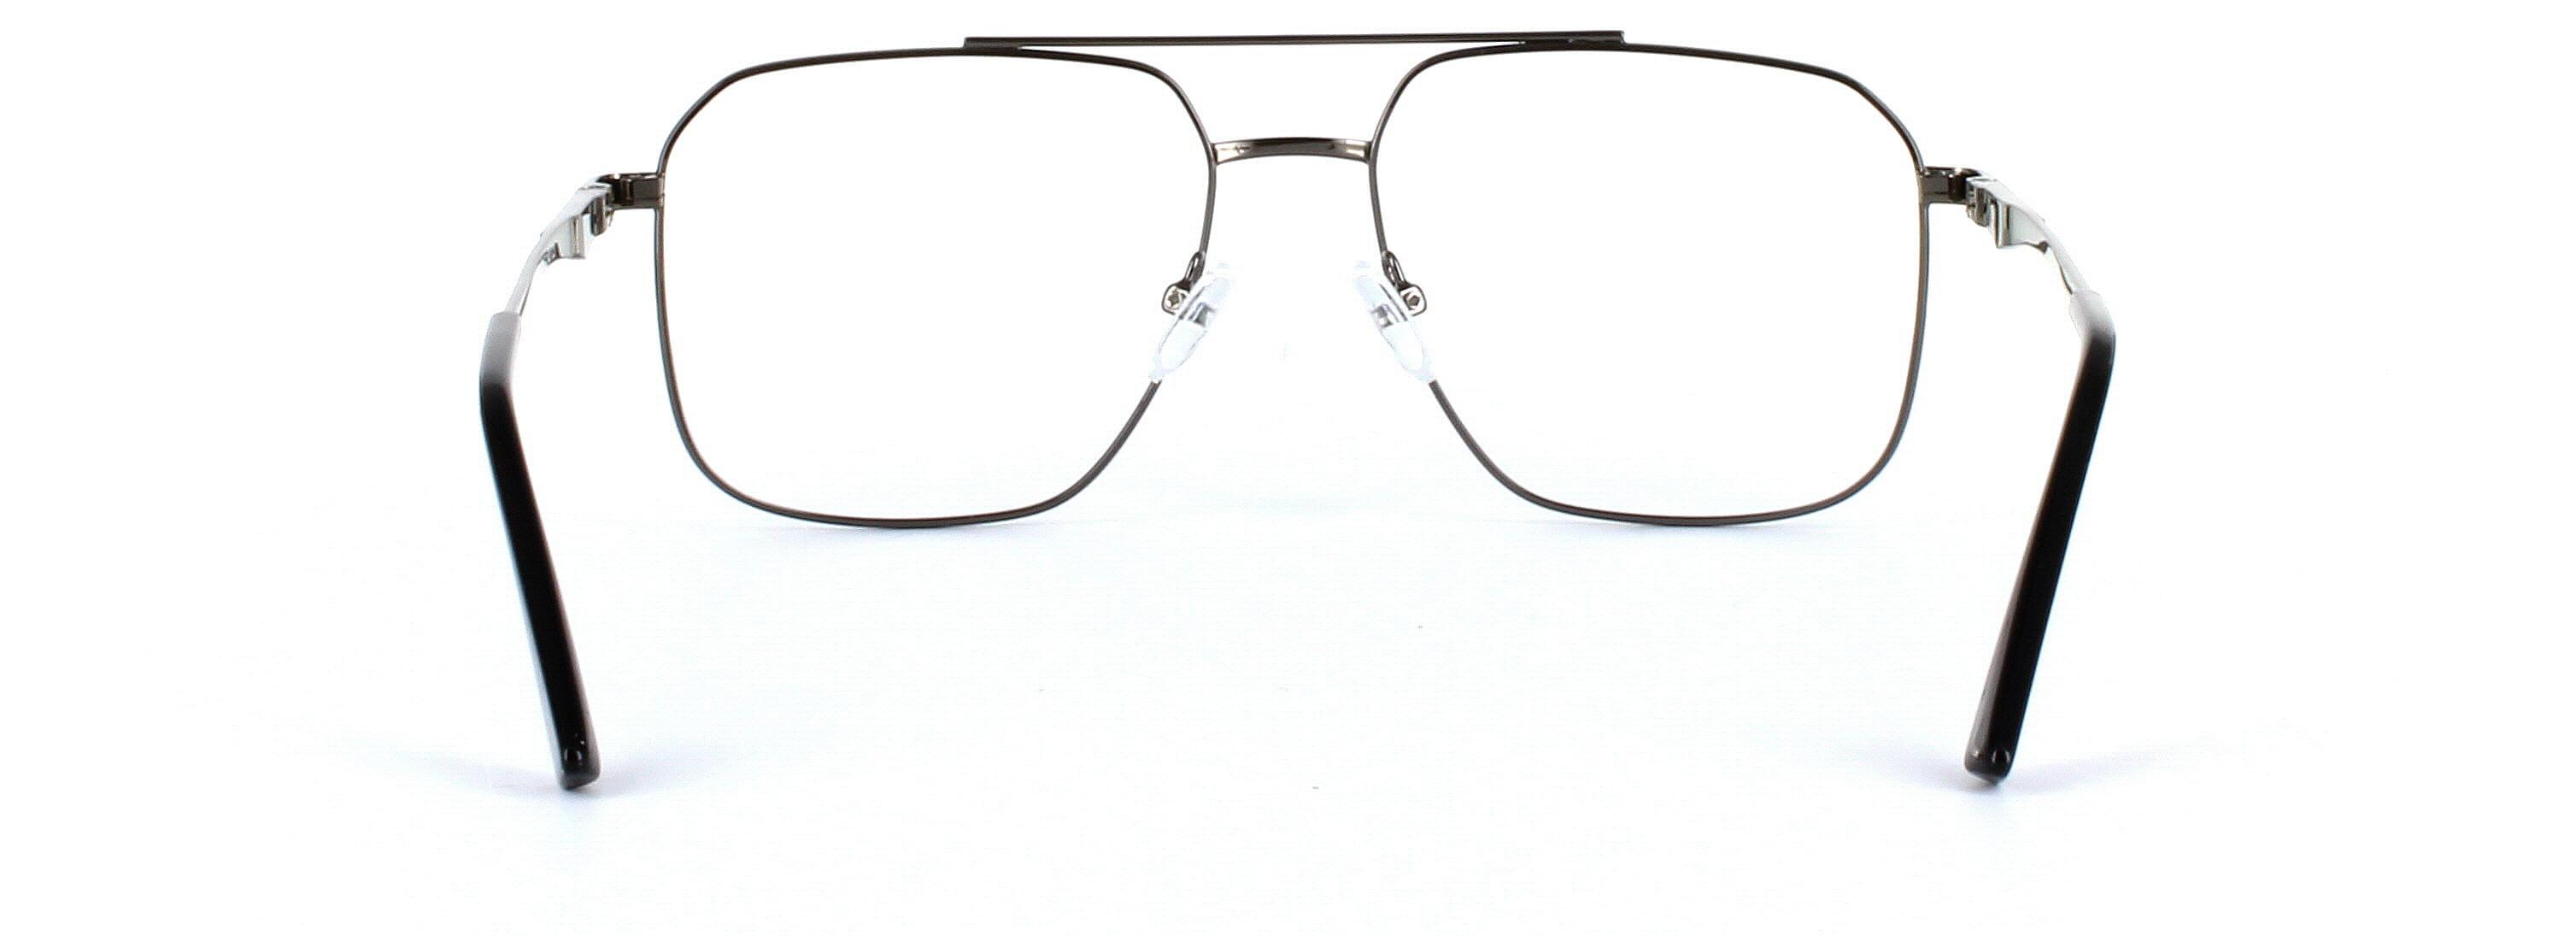 Caludon - Gunmetal aviator gents glasses - image 3